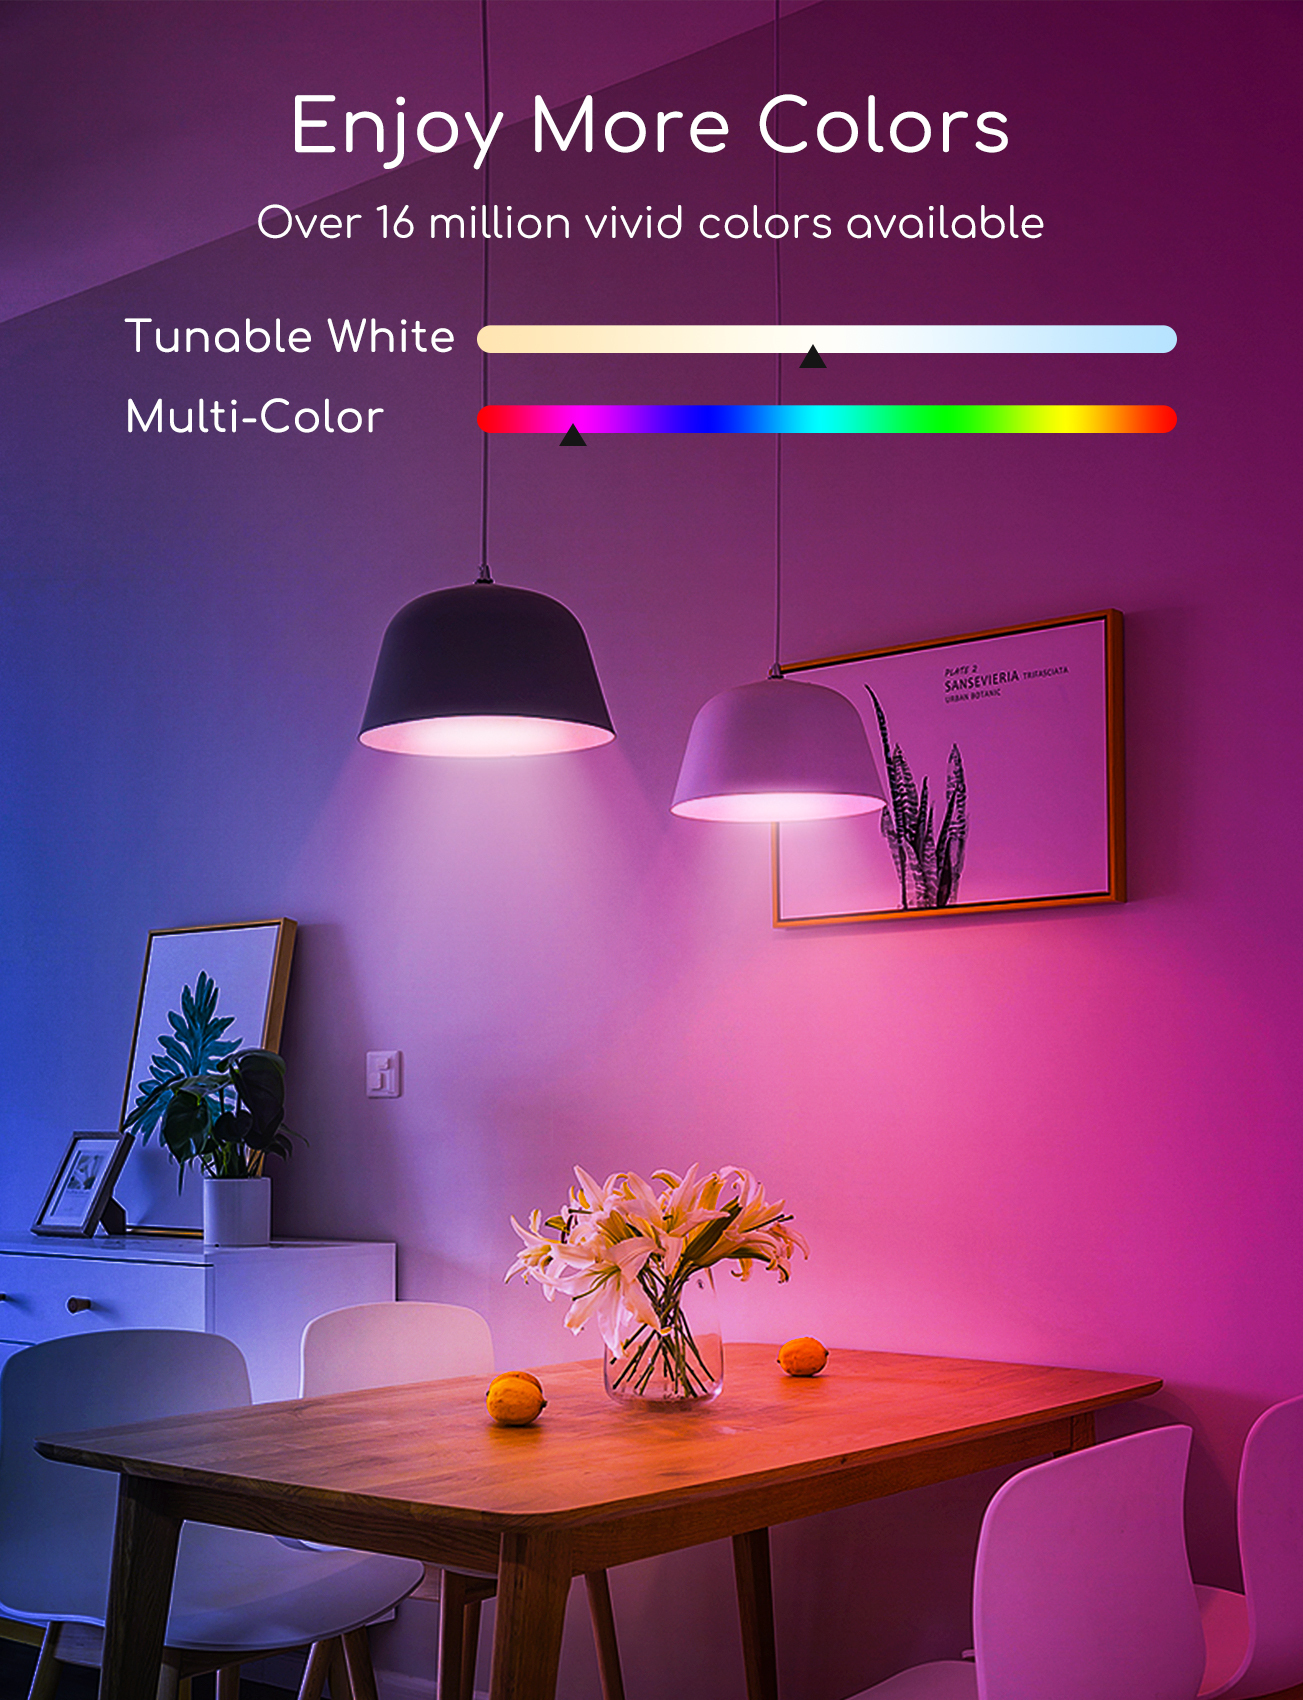 Aigostar Bombilla LED inteligente WiFi vela C37, 5W, E27 rosca gorda, RGB + CCT. Regulable multicolor + luz cálida o blanca 3000 a 6500K. Compatible Alexa y Google Home. 1 Unidad